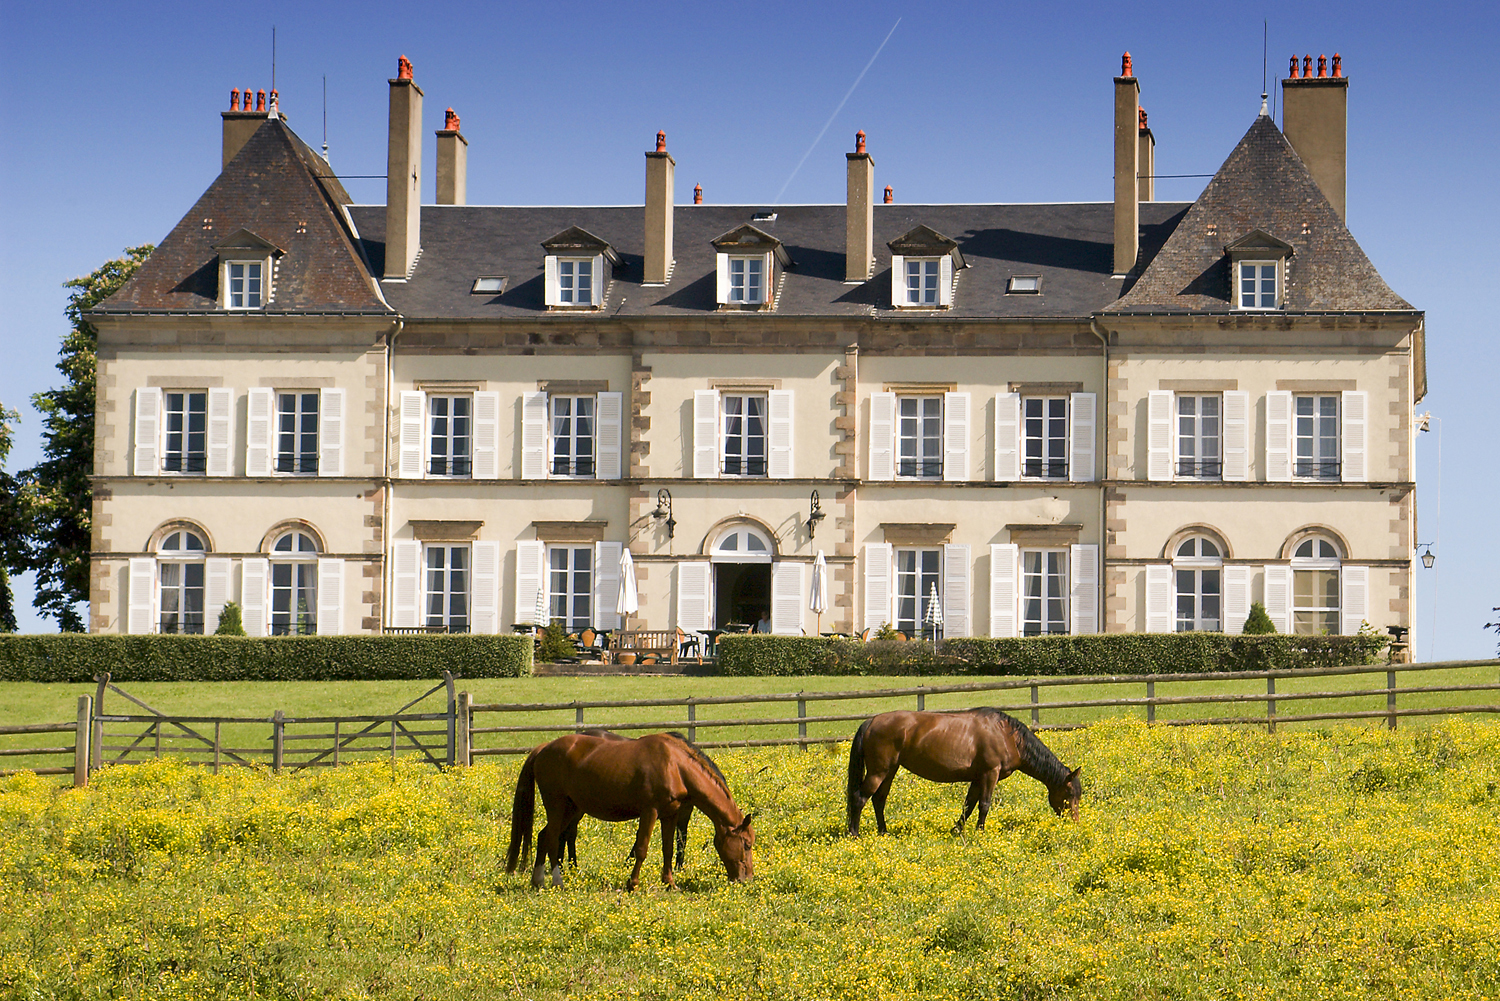 Chateau Ygrand, near Moulins, France.